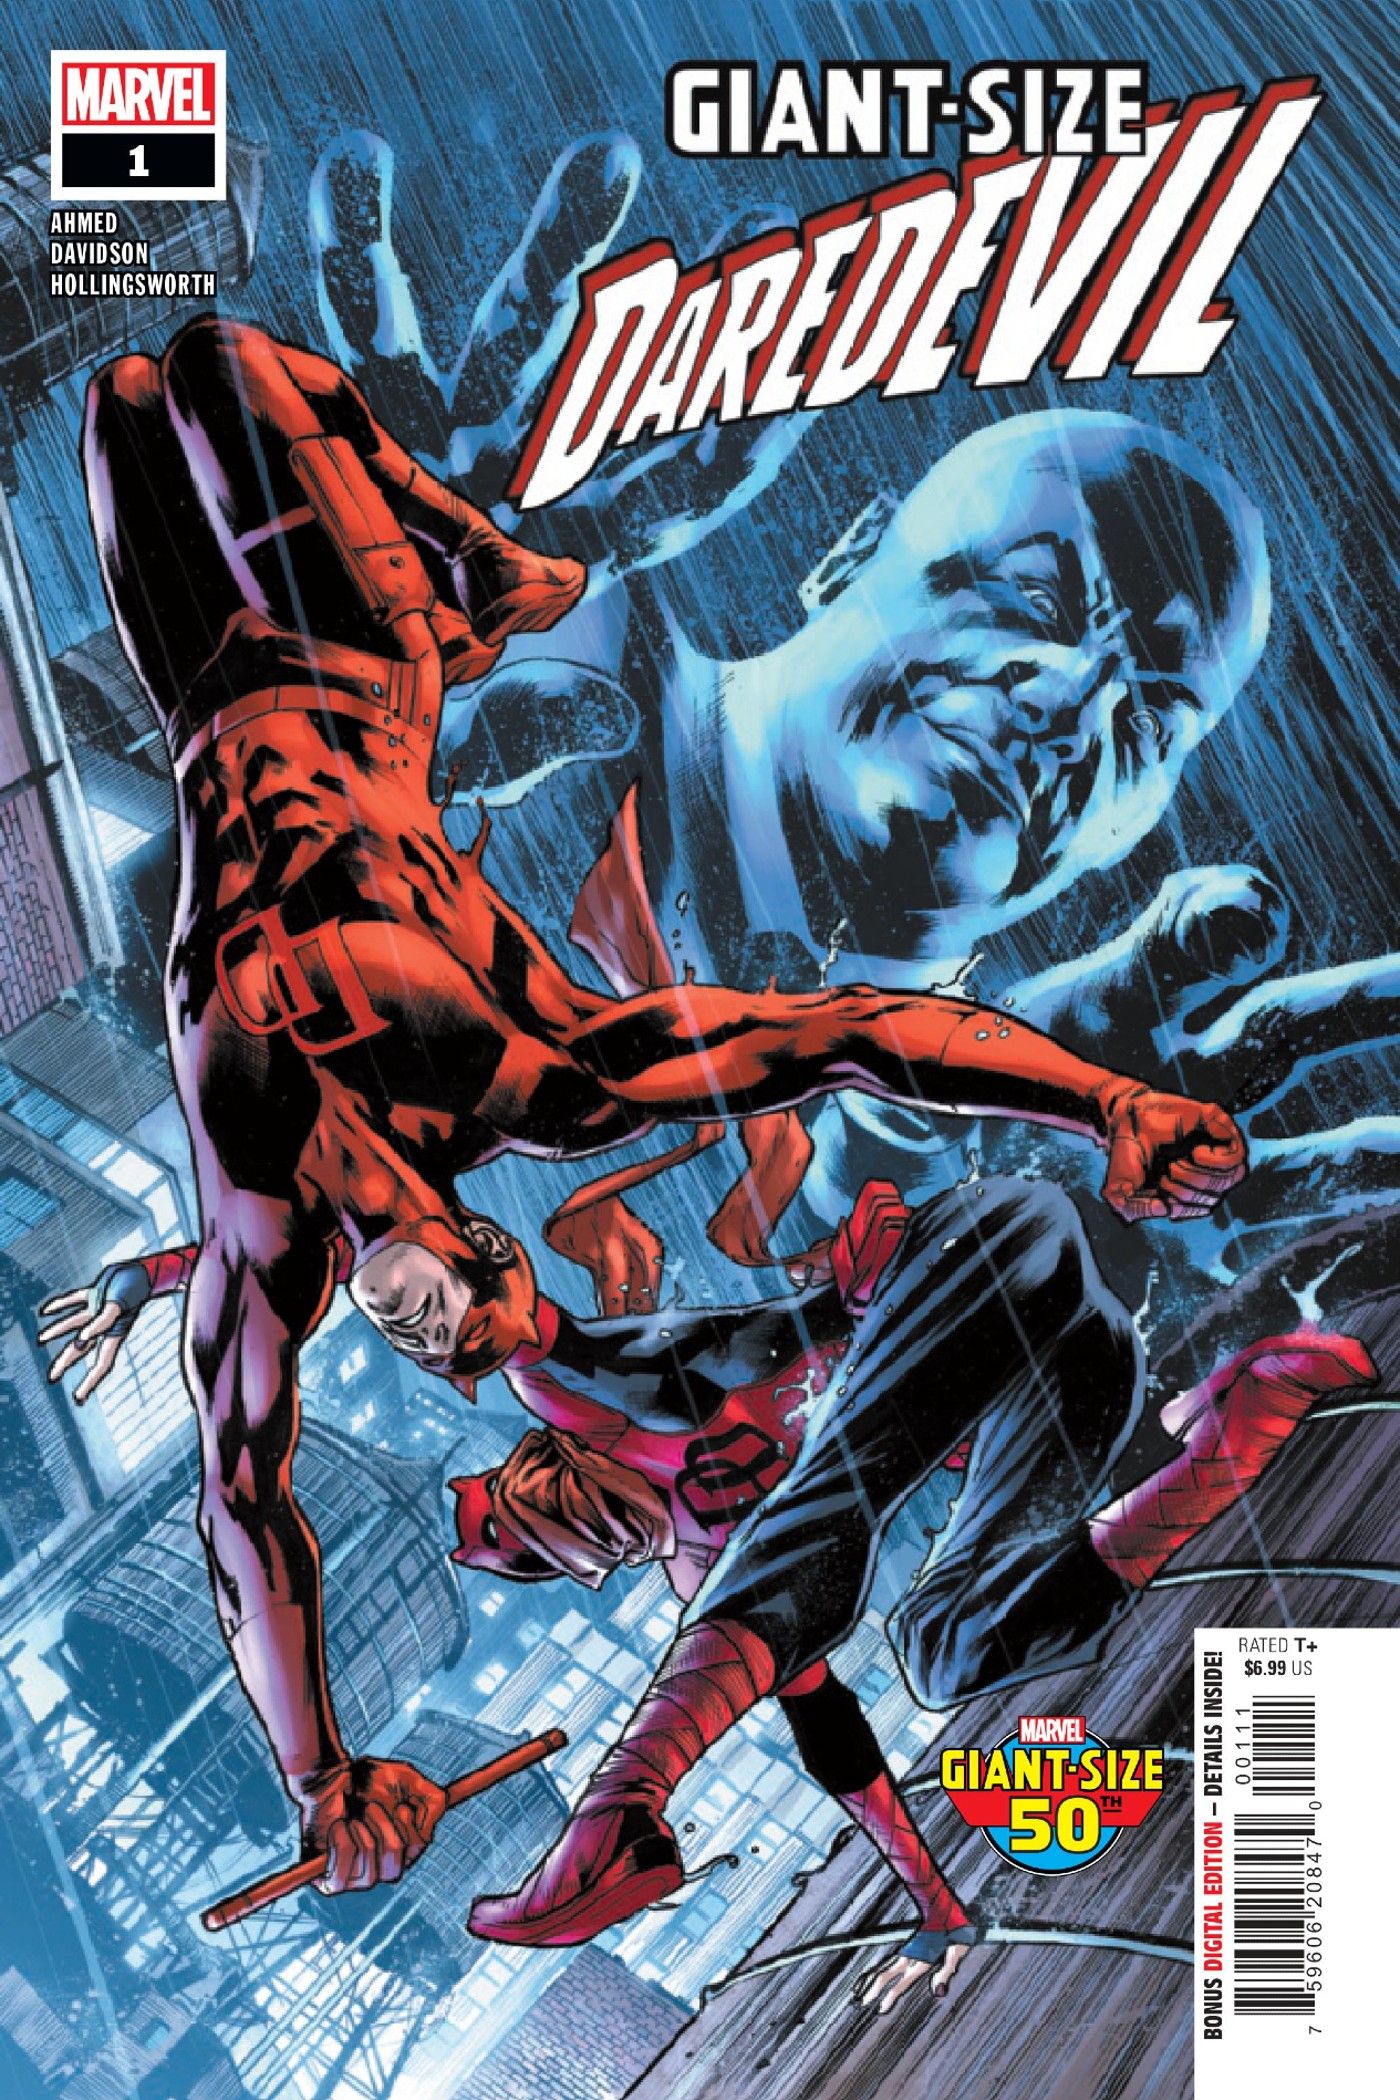 Possessed Kingpin looks upon Matt Murdock and Elektra in Giant-Size Daredevil #1 cover art.